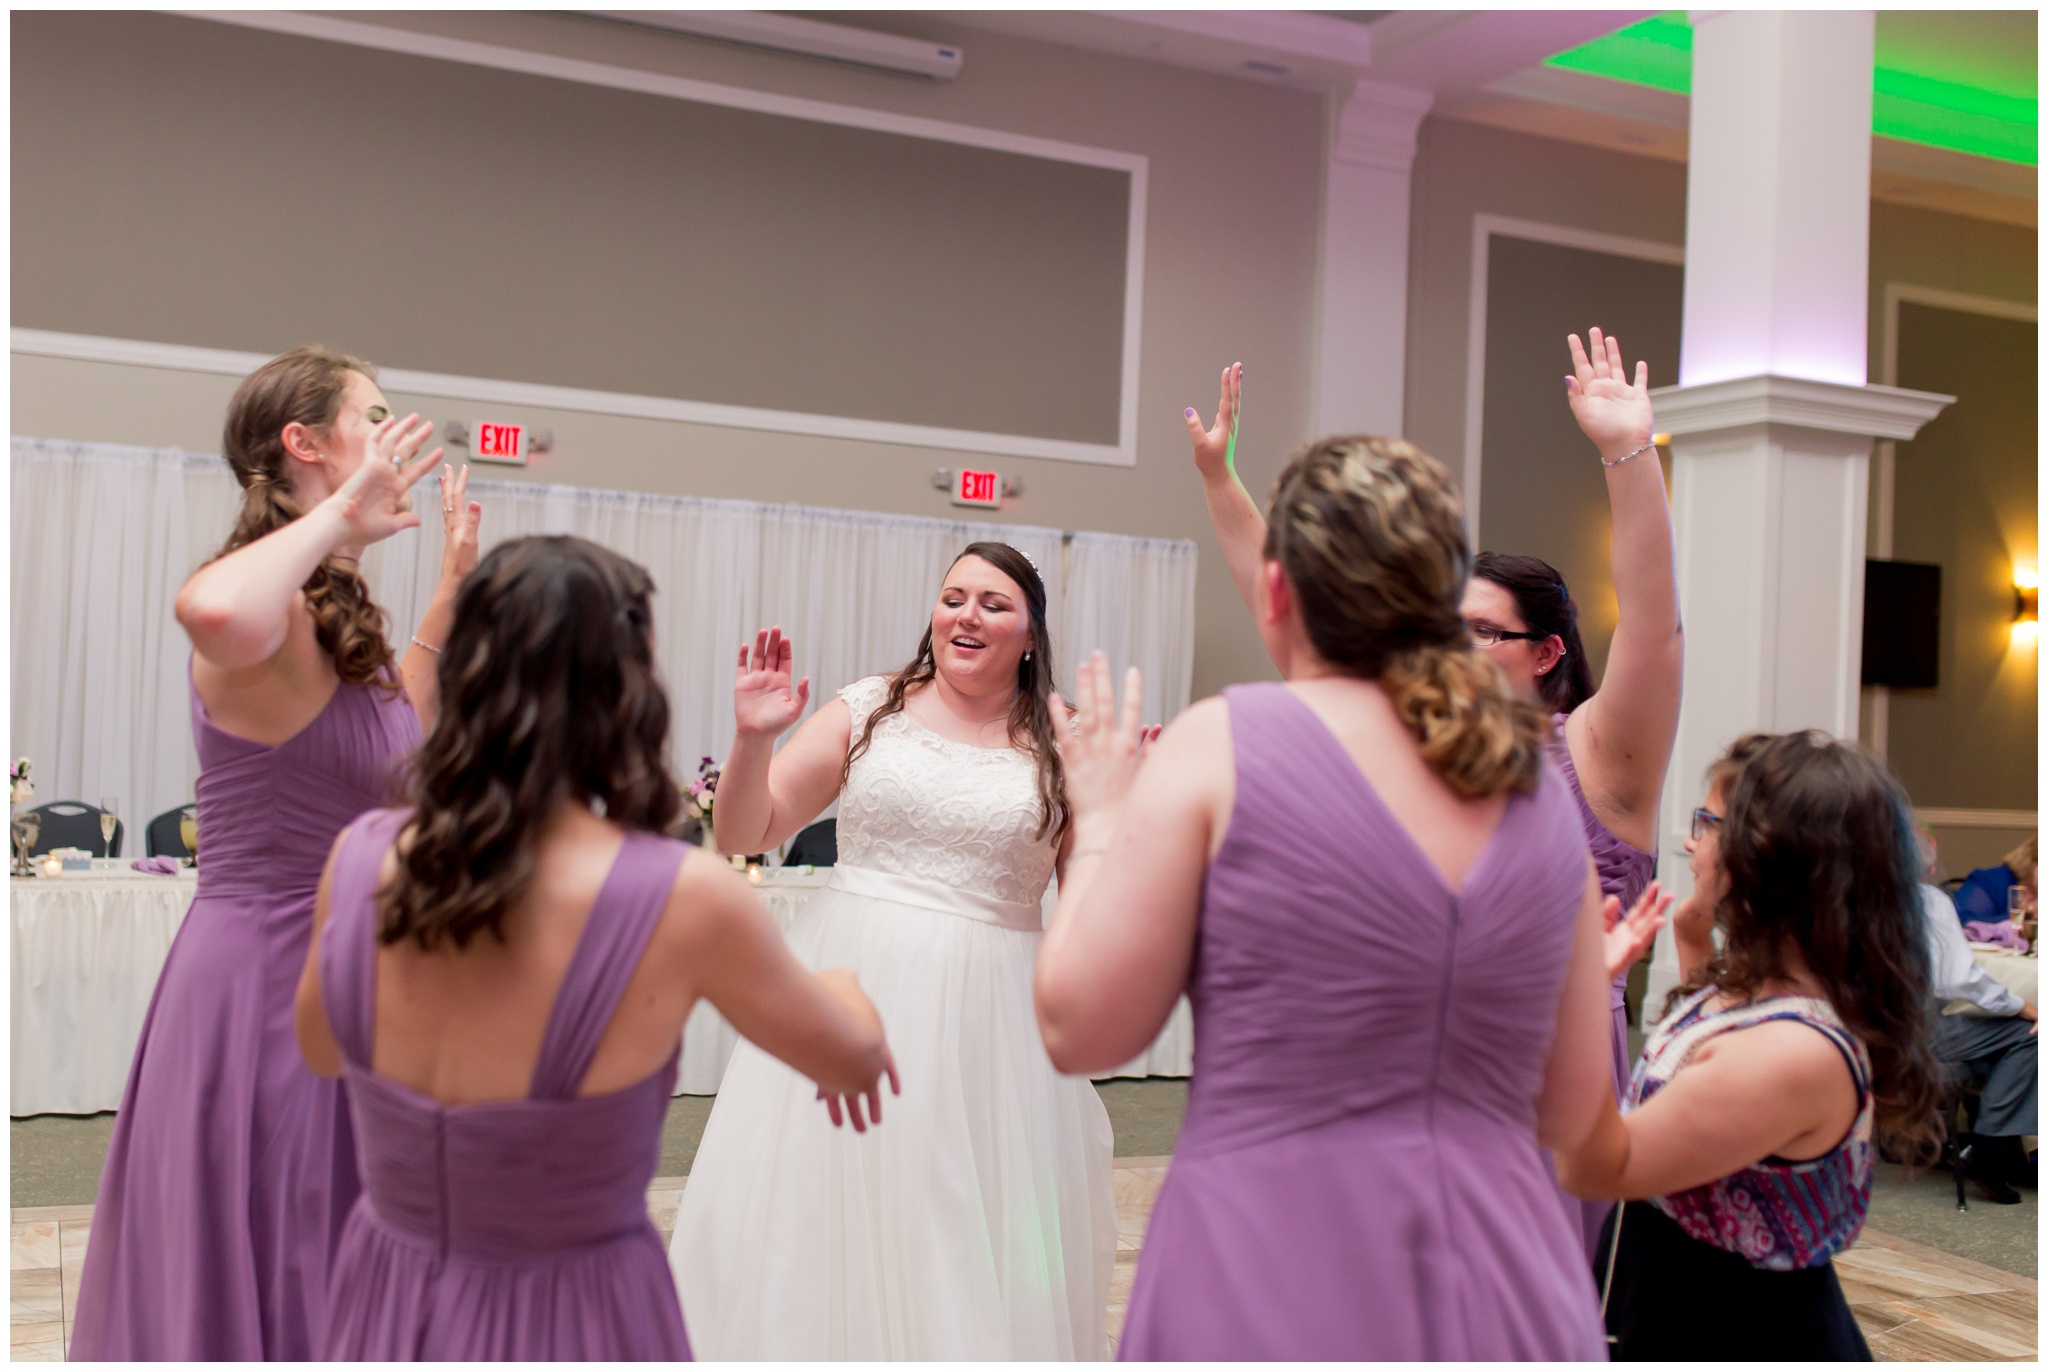 wedding reception guests dancing at Bel Air Events in Kokomo Indiana